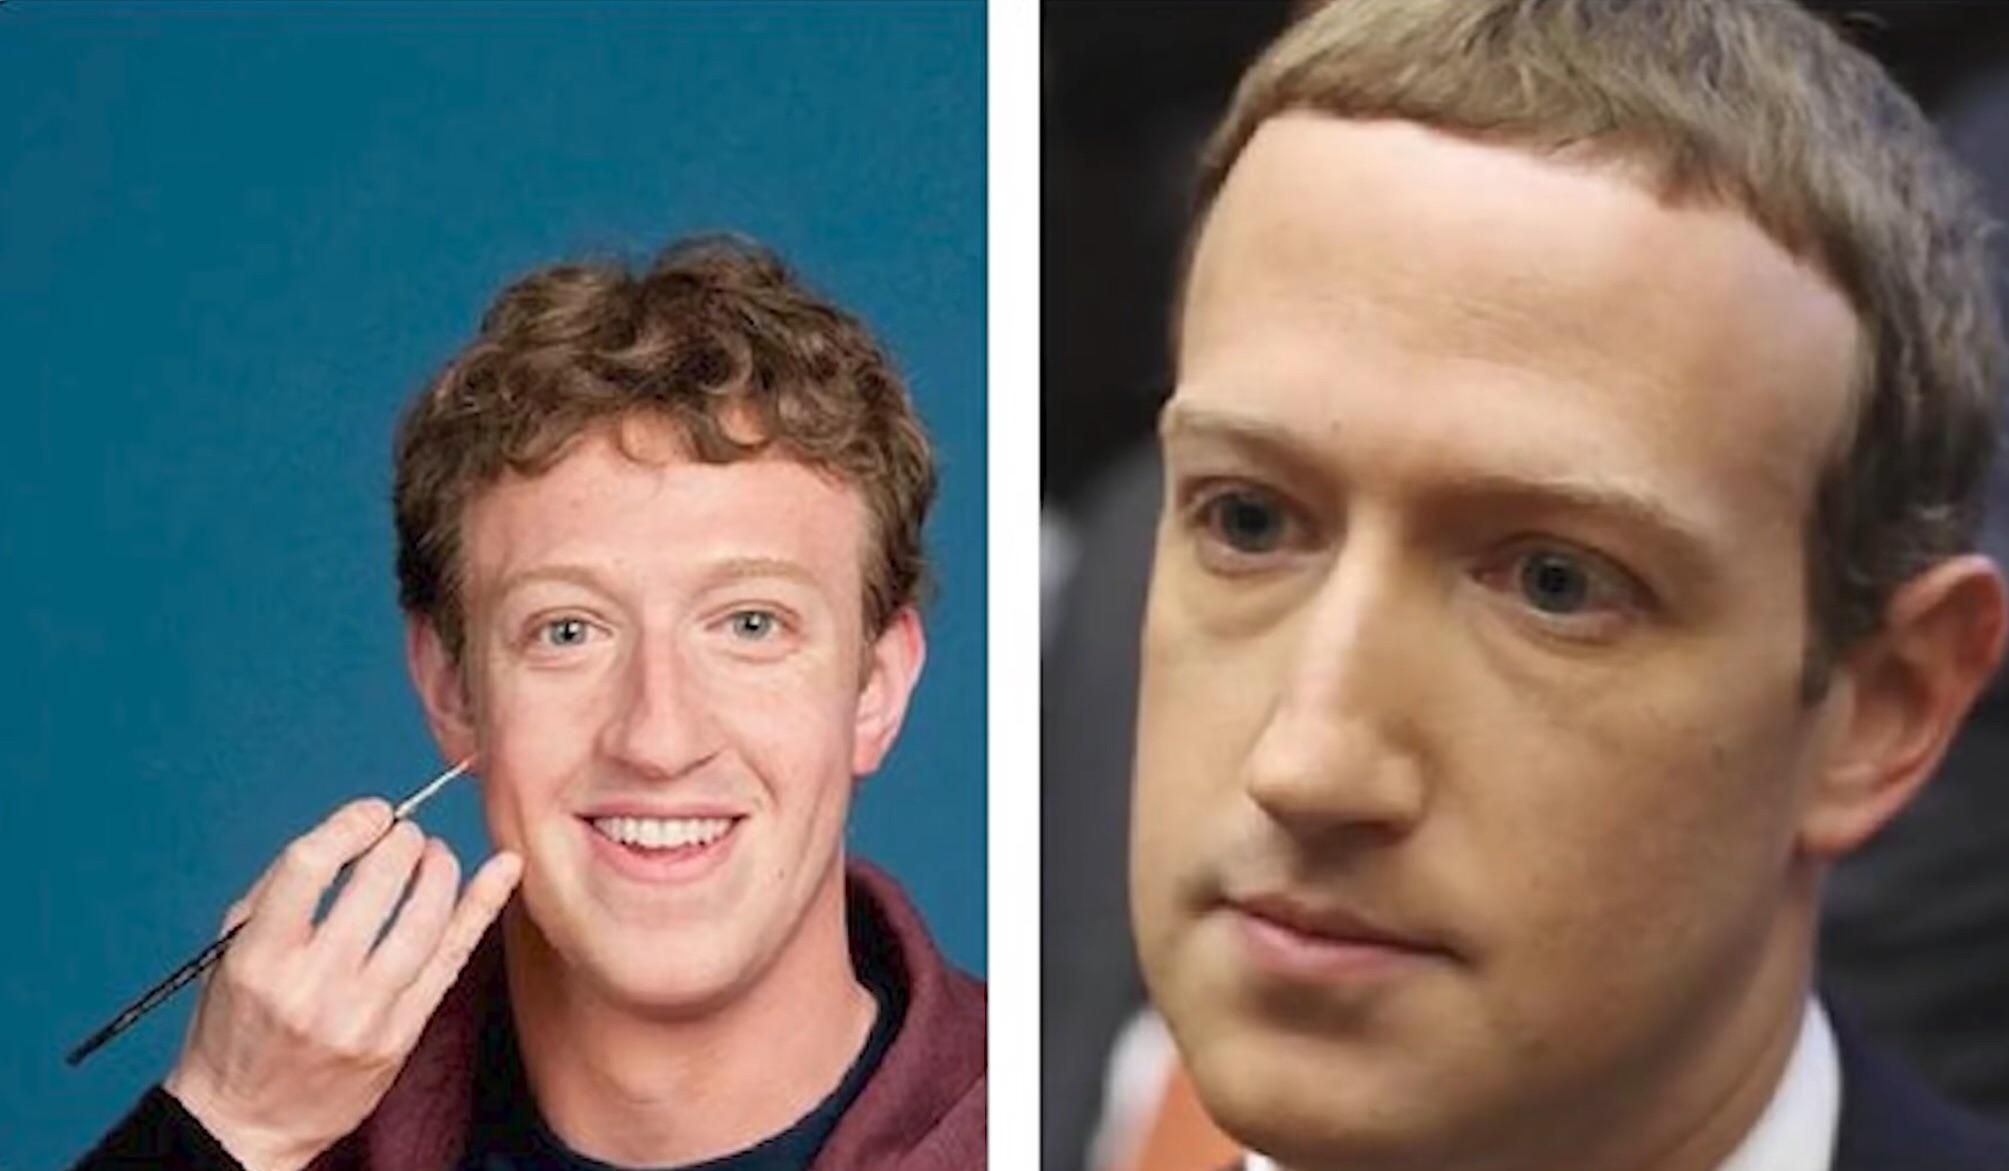 Wax Mark Zuckerberg looks more human than Mark Zuckerberg does